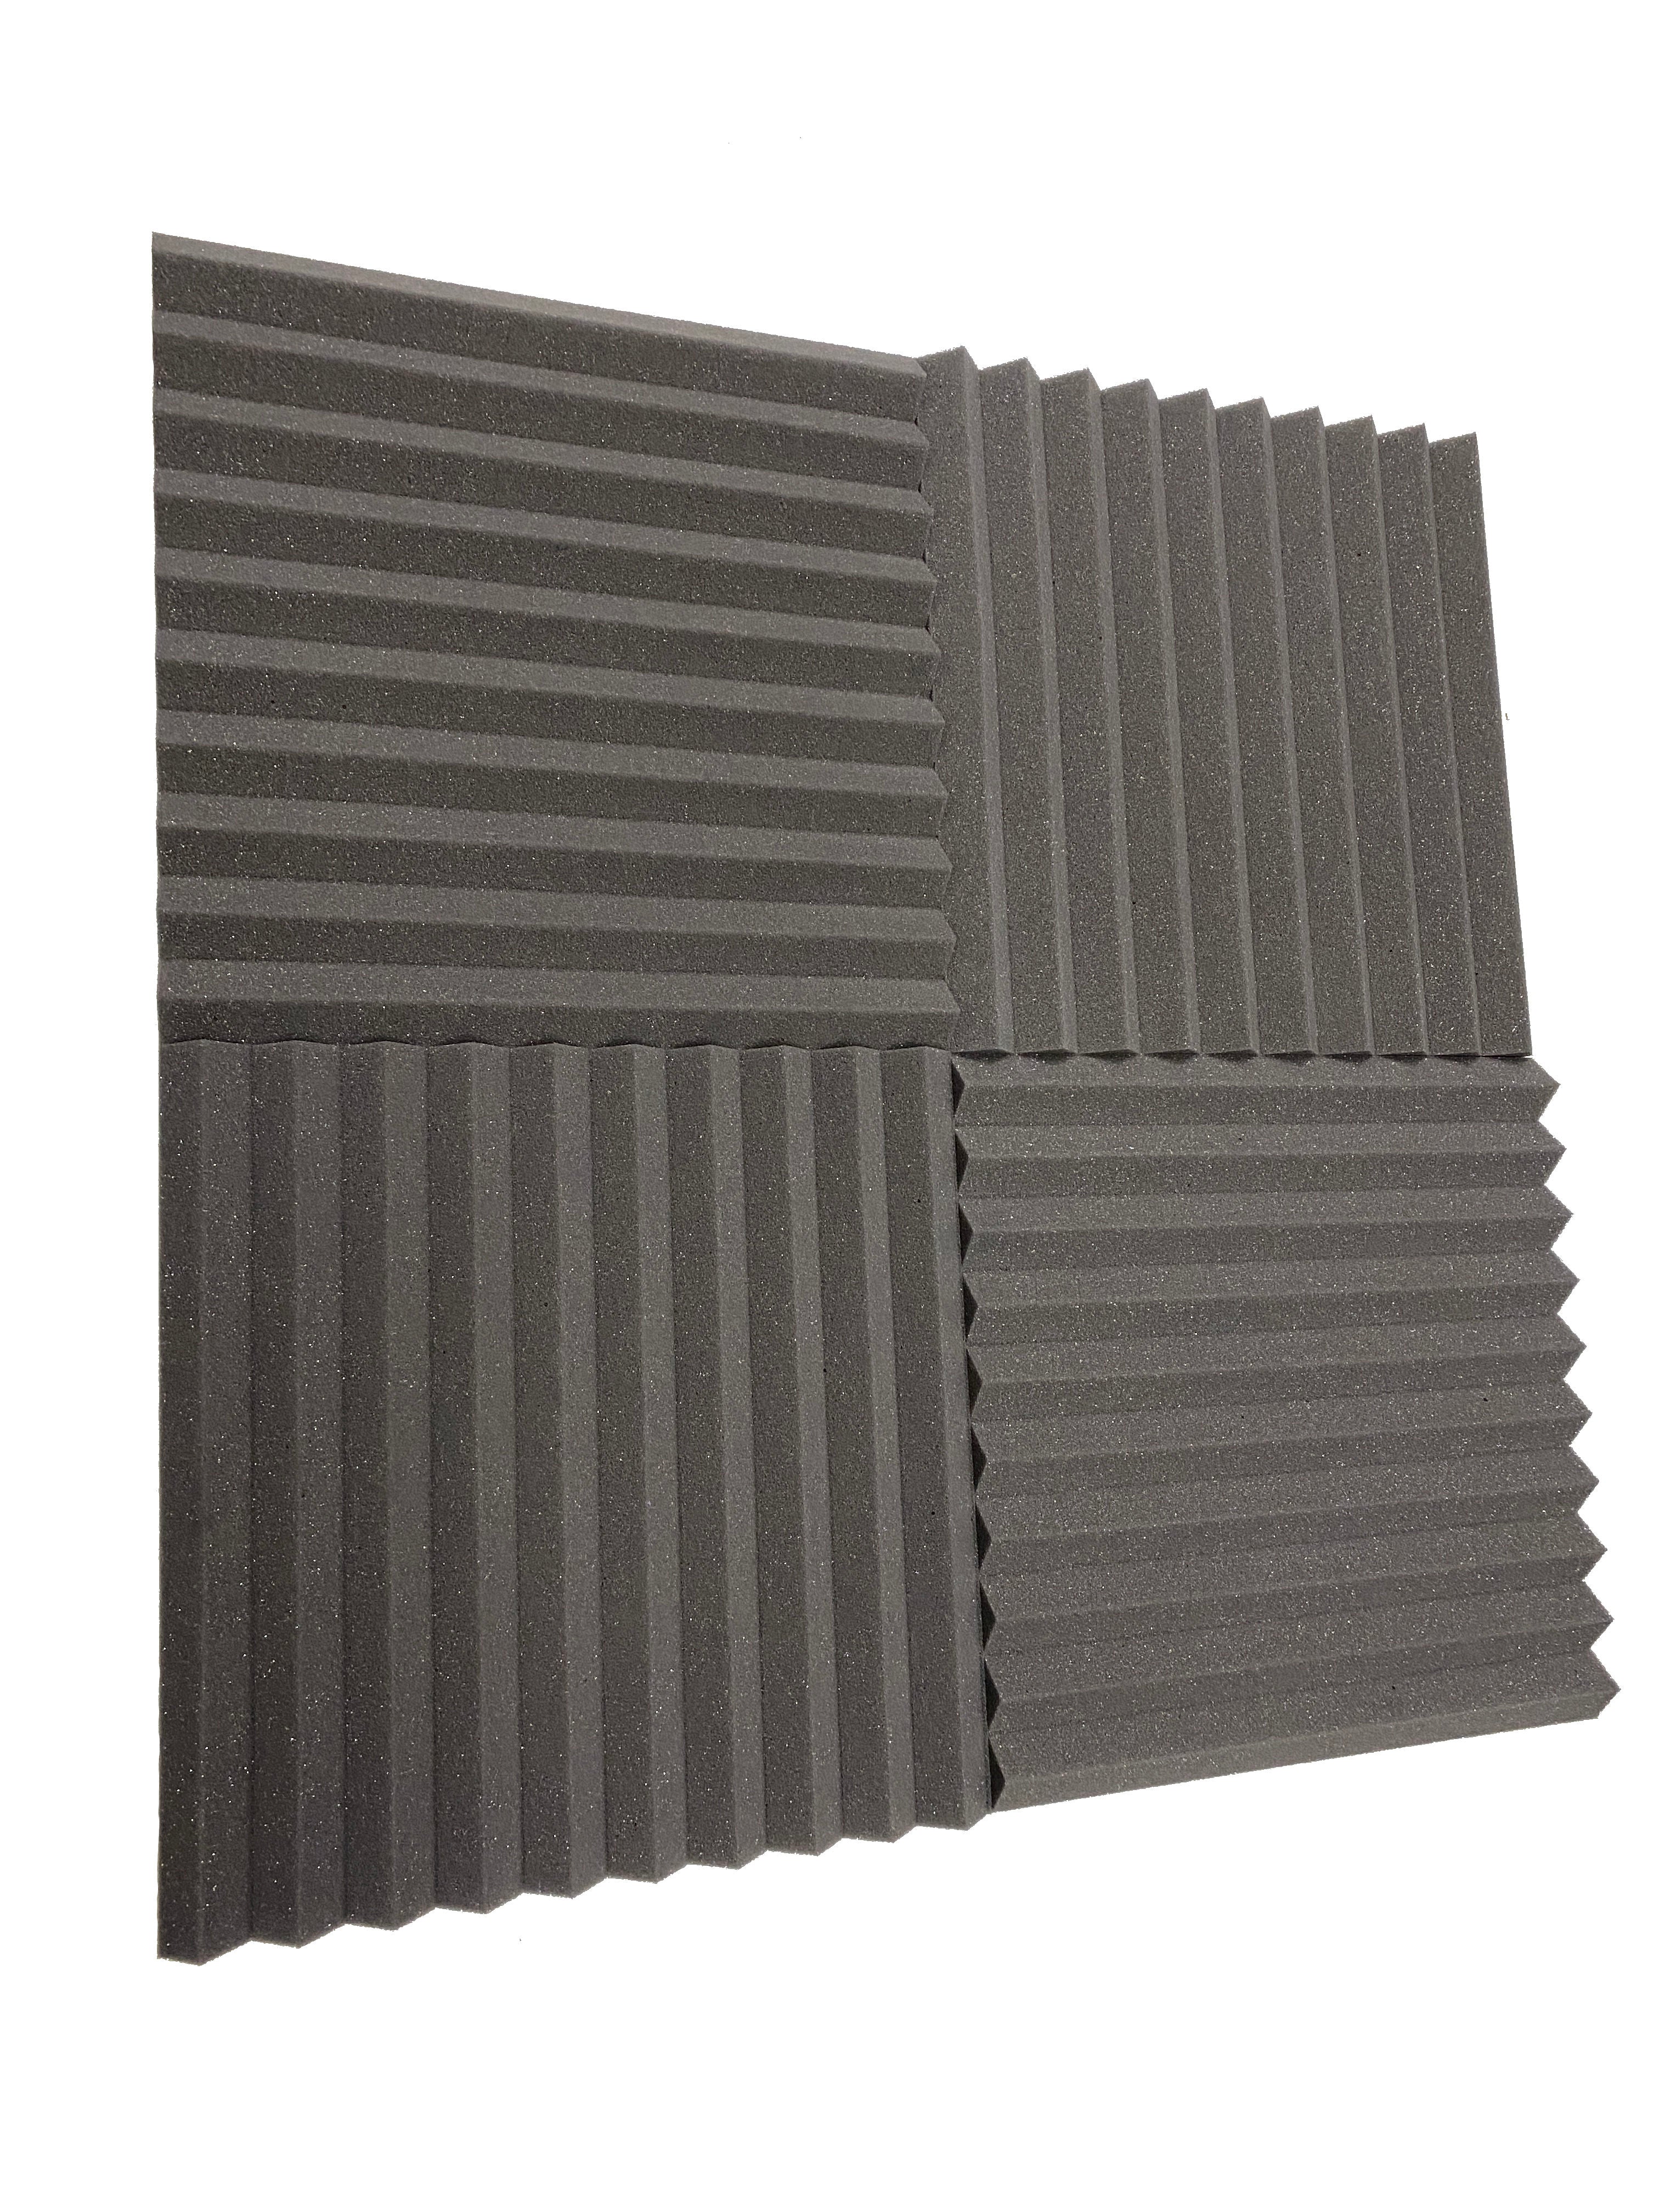 Kaufen mittelgrau Wedge 15&quot; Acoustic Studio Foam Tile Kit – 72 Fliesen, 10,44 m² Abdeckung